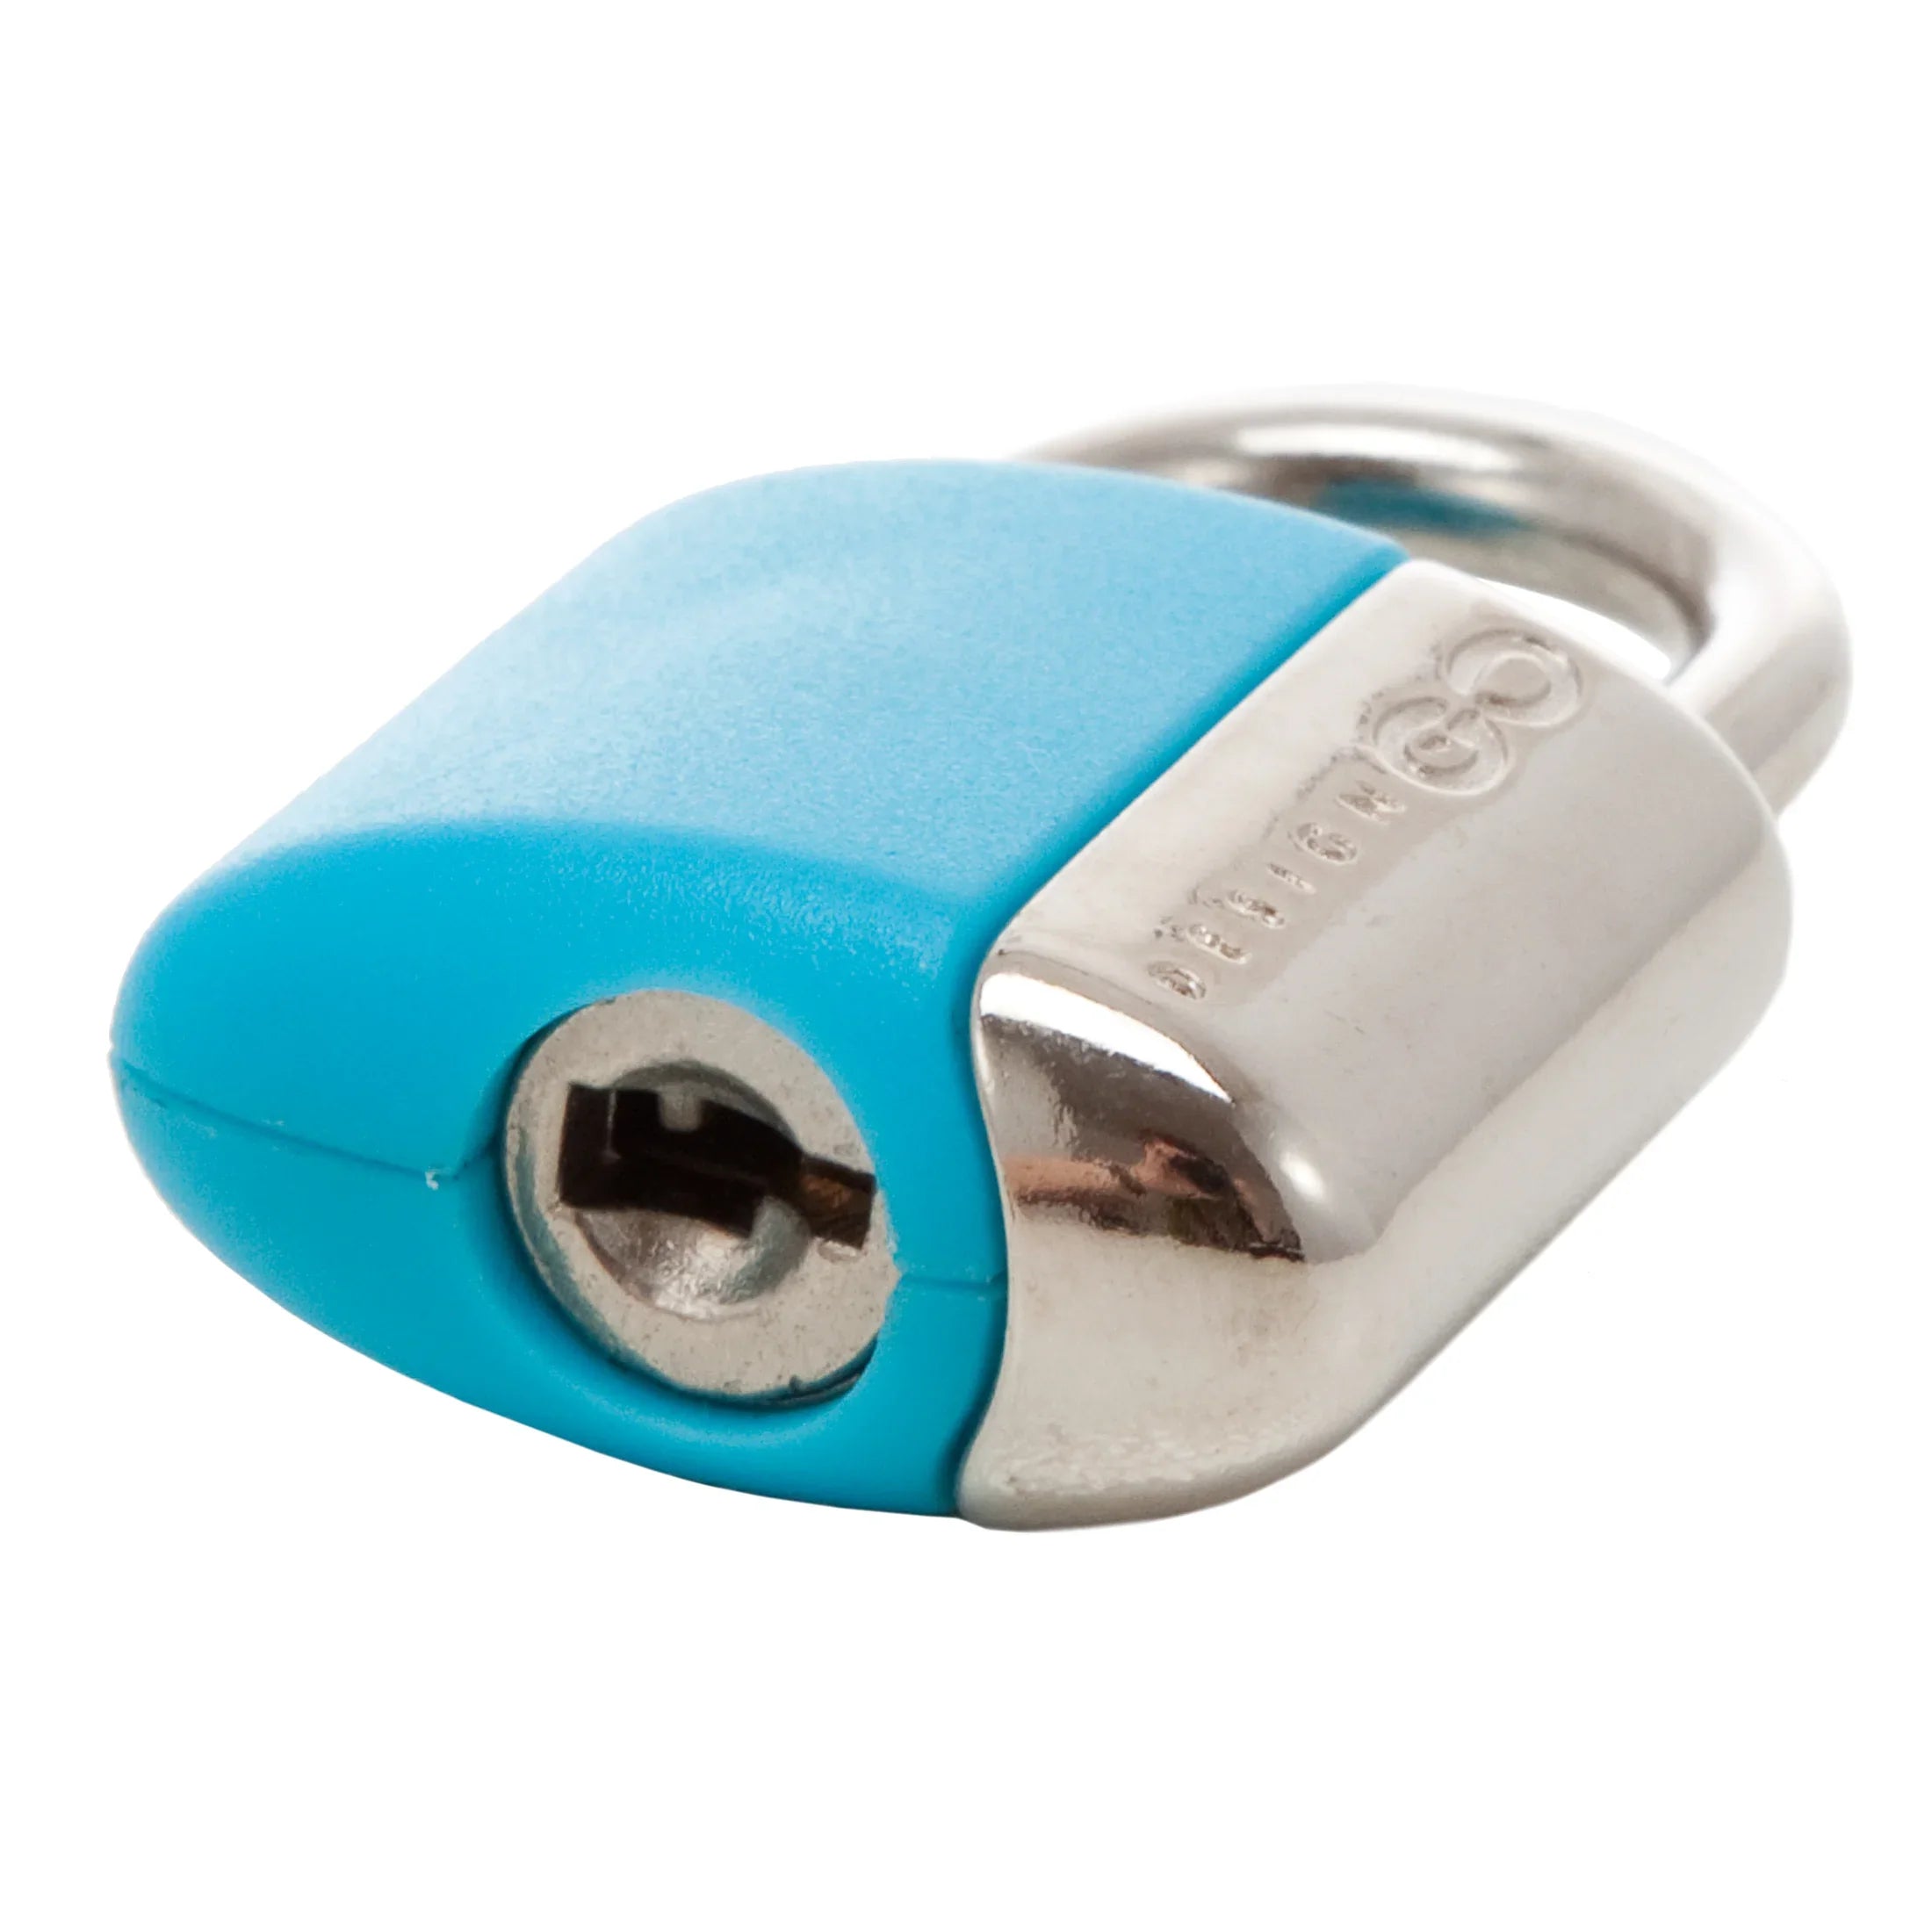 Design Go travel accessories Glo Key Locks padlocks with key set of 2 - light green